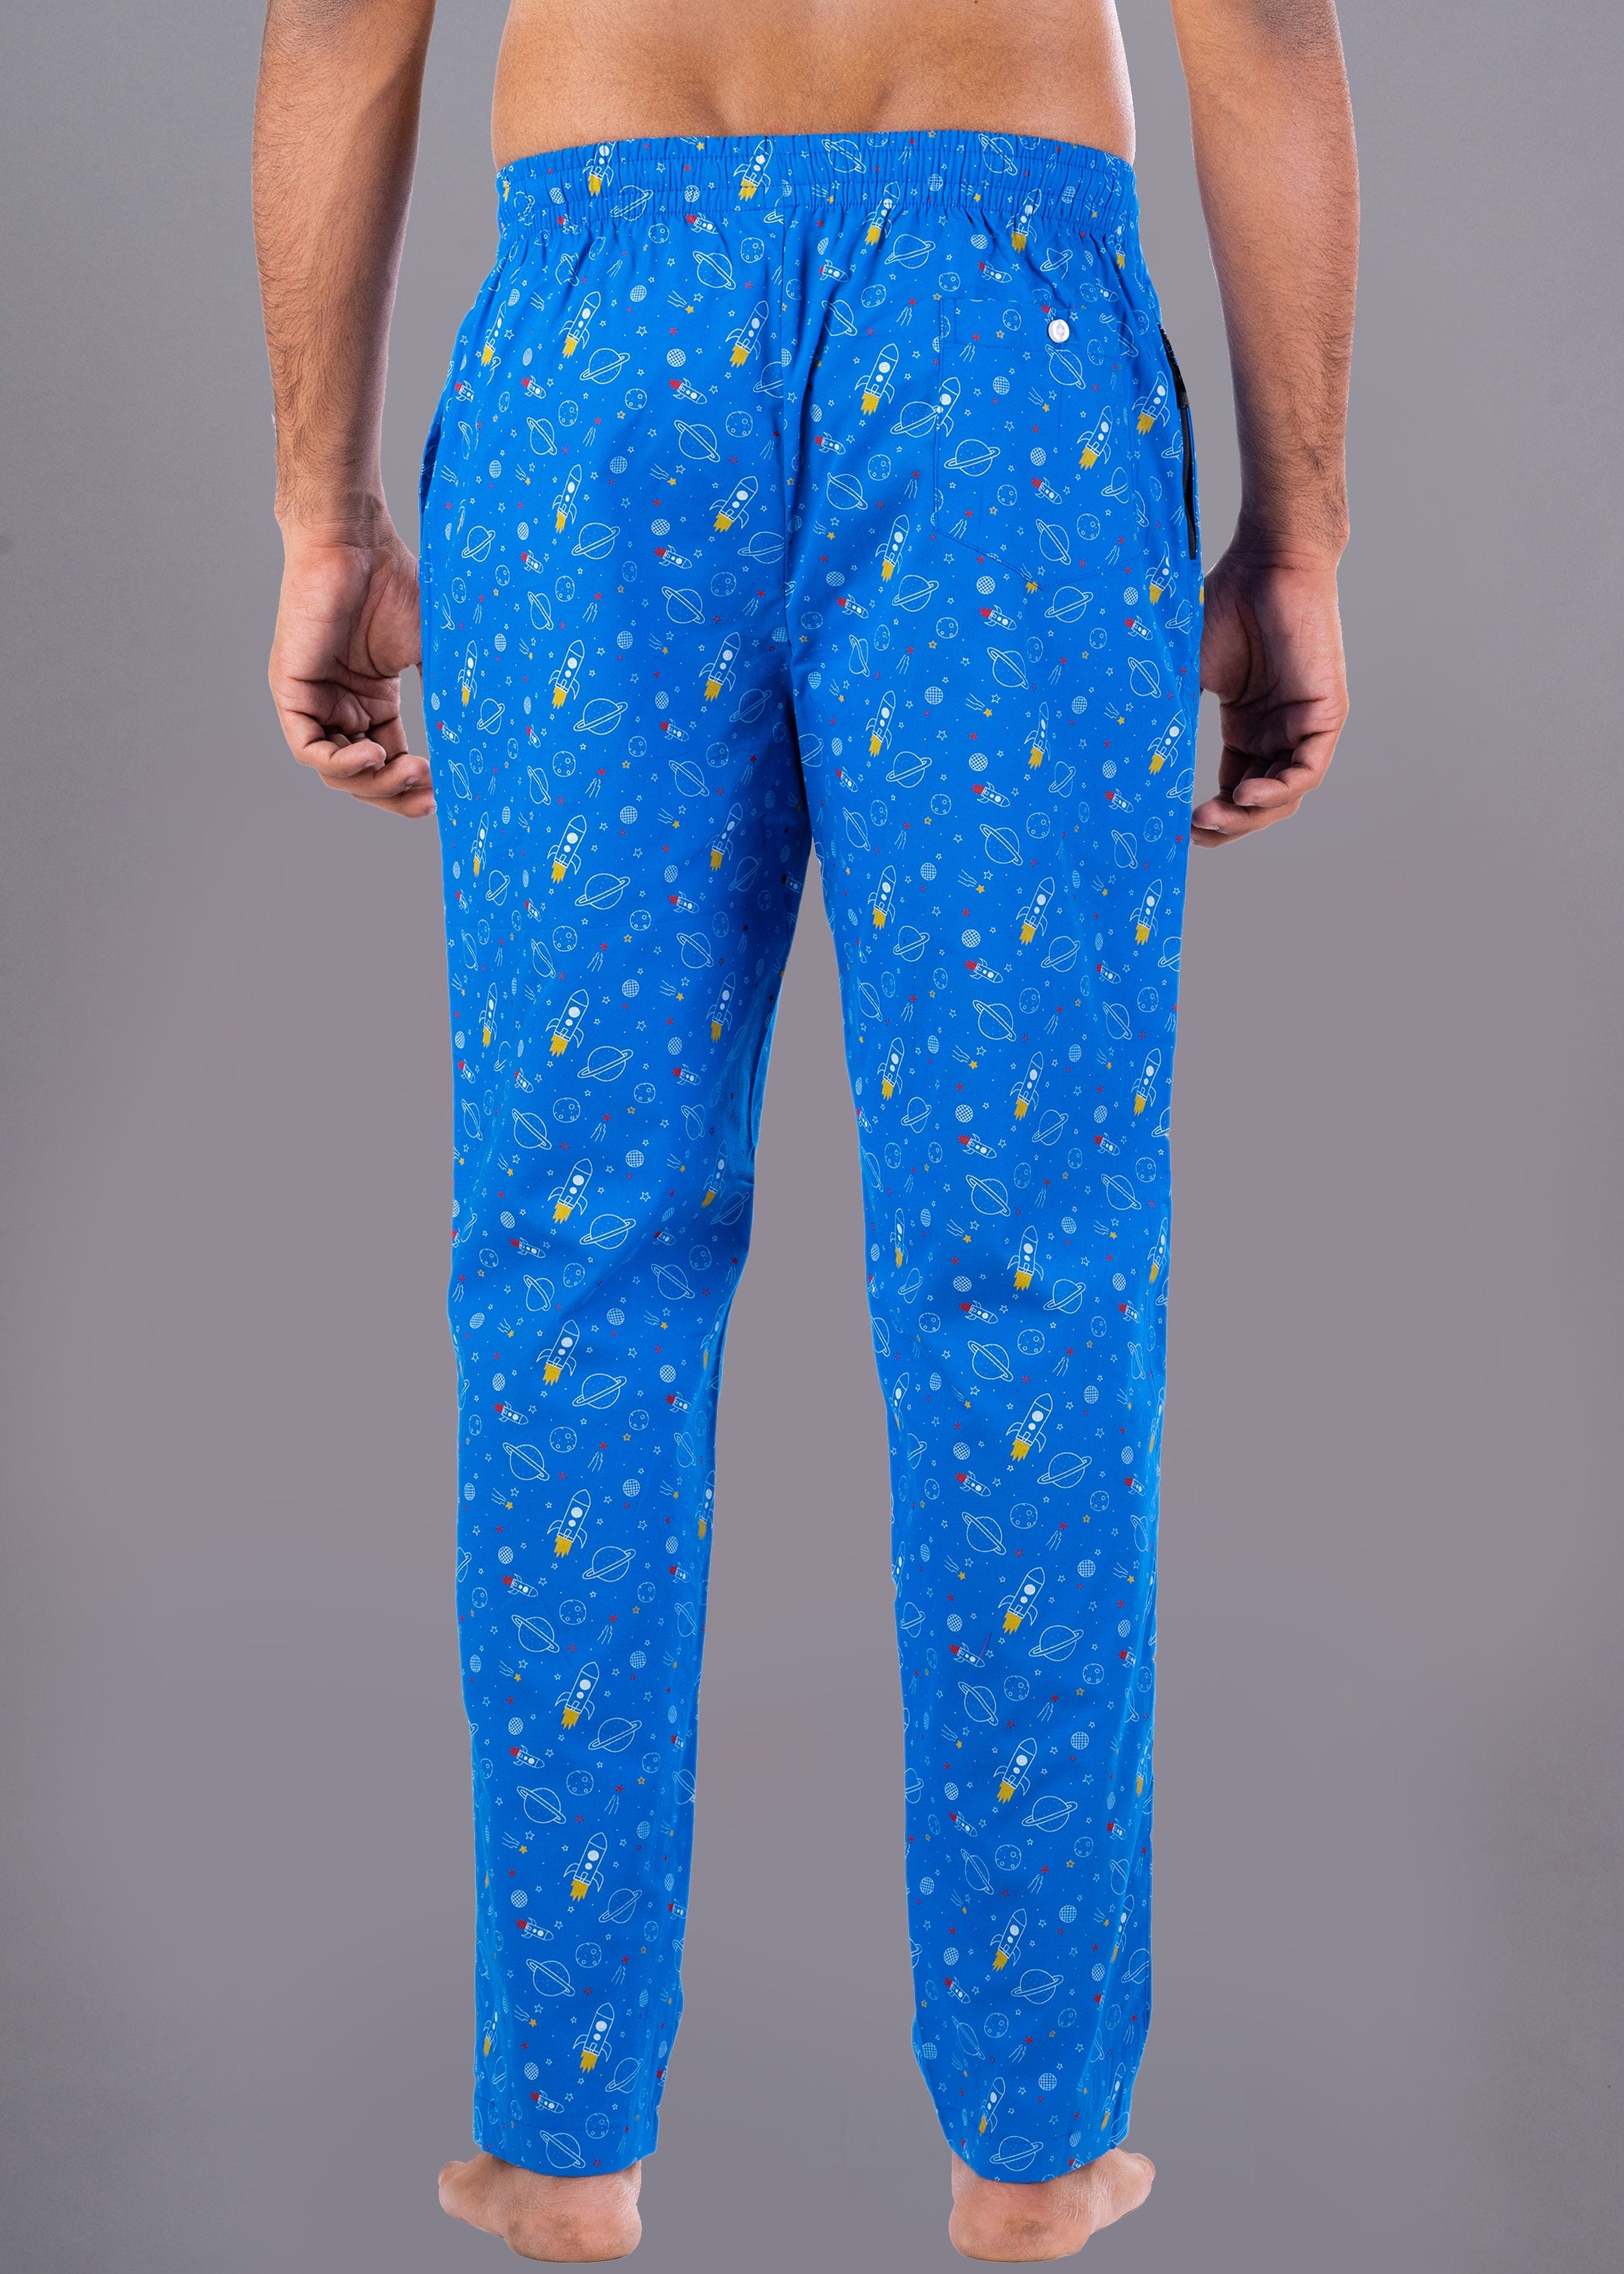 Galaxy Printed Blue Cotton Pyjama For Men